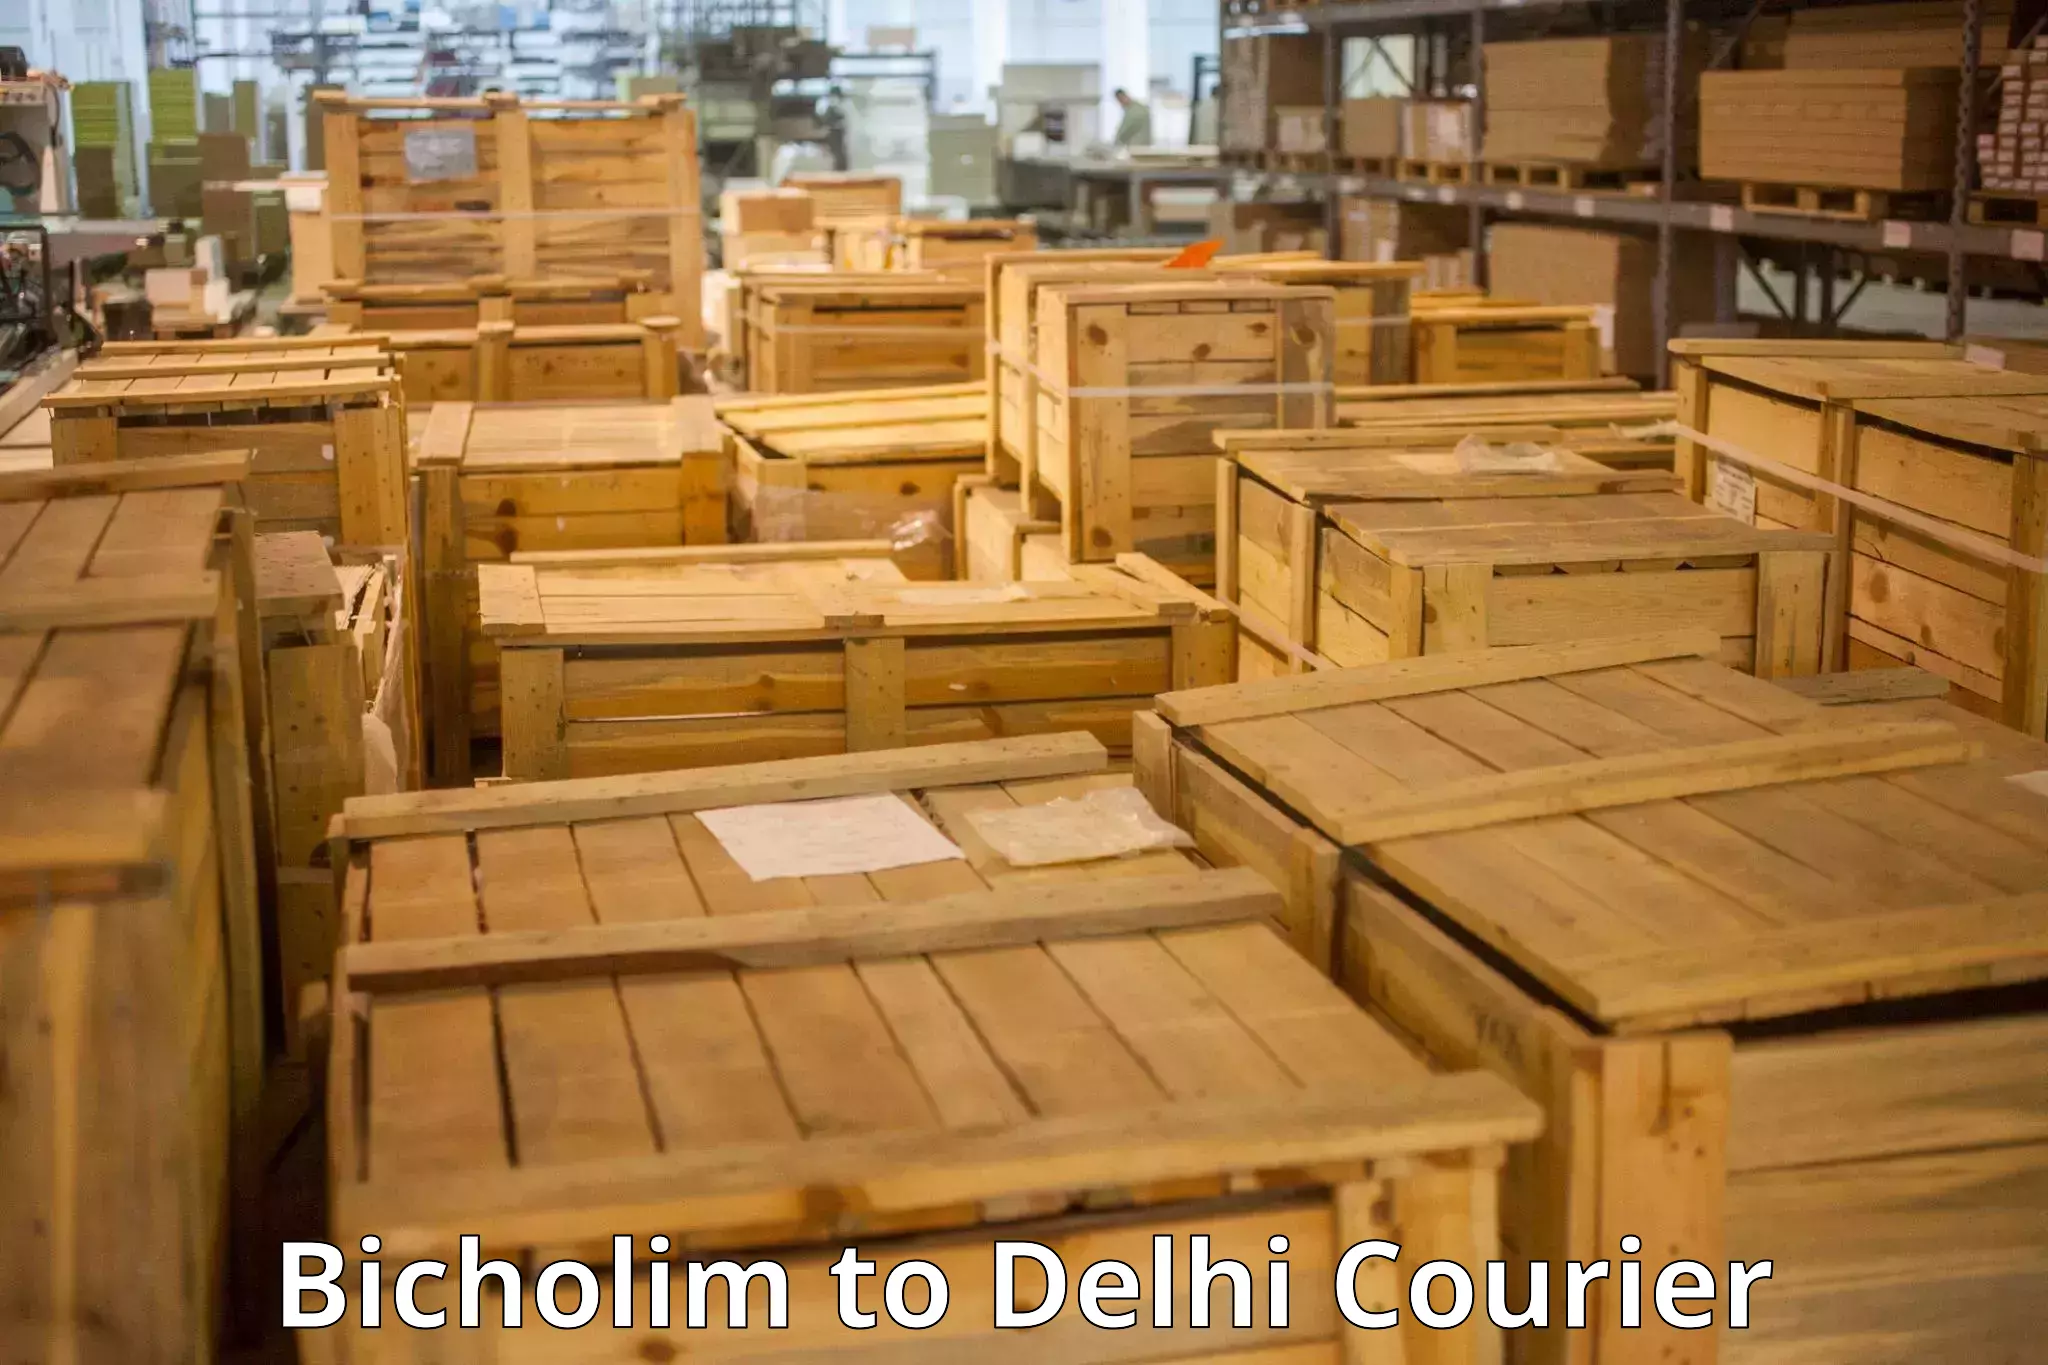 Luggage shipment specialists Bicholim to Delhi